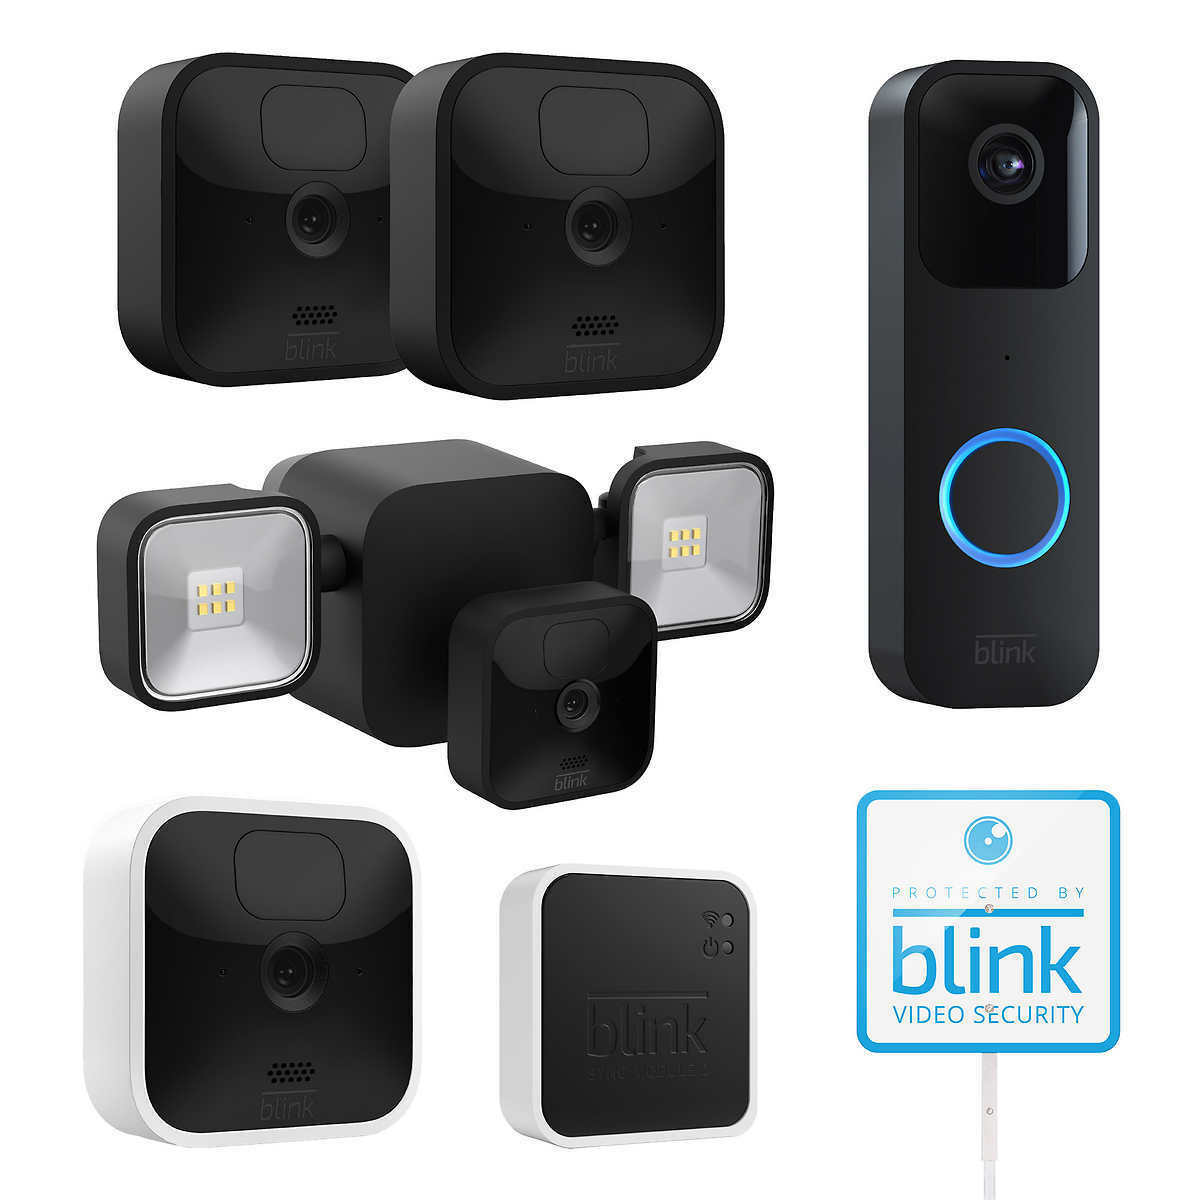 Blink For Home Archives - After Dark Surveillance